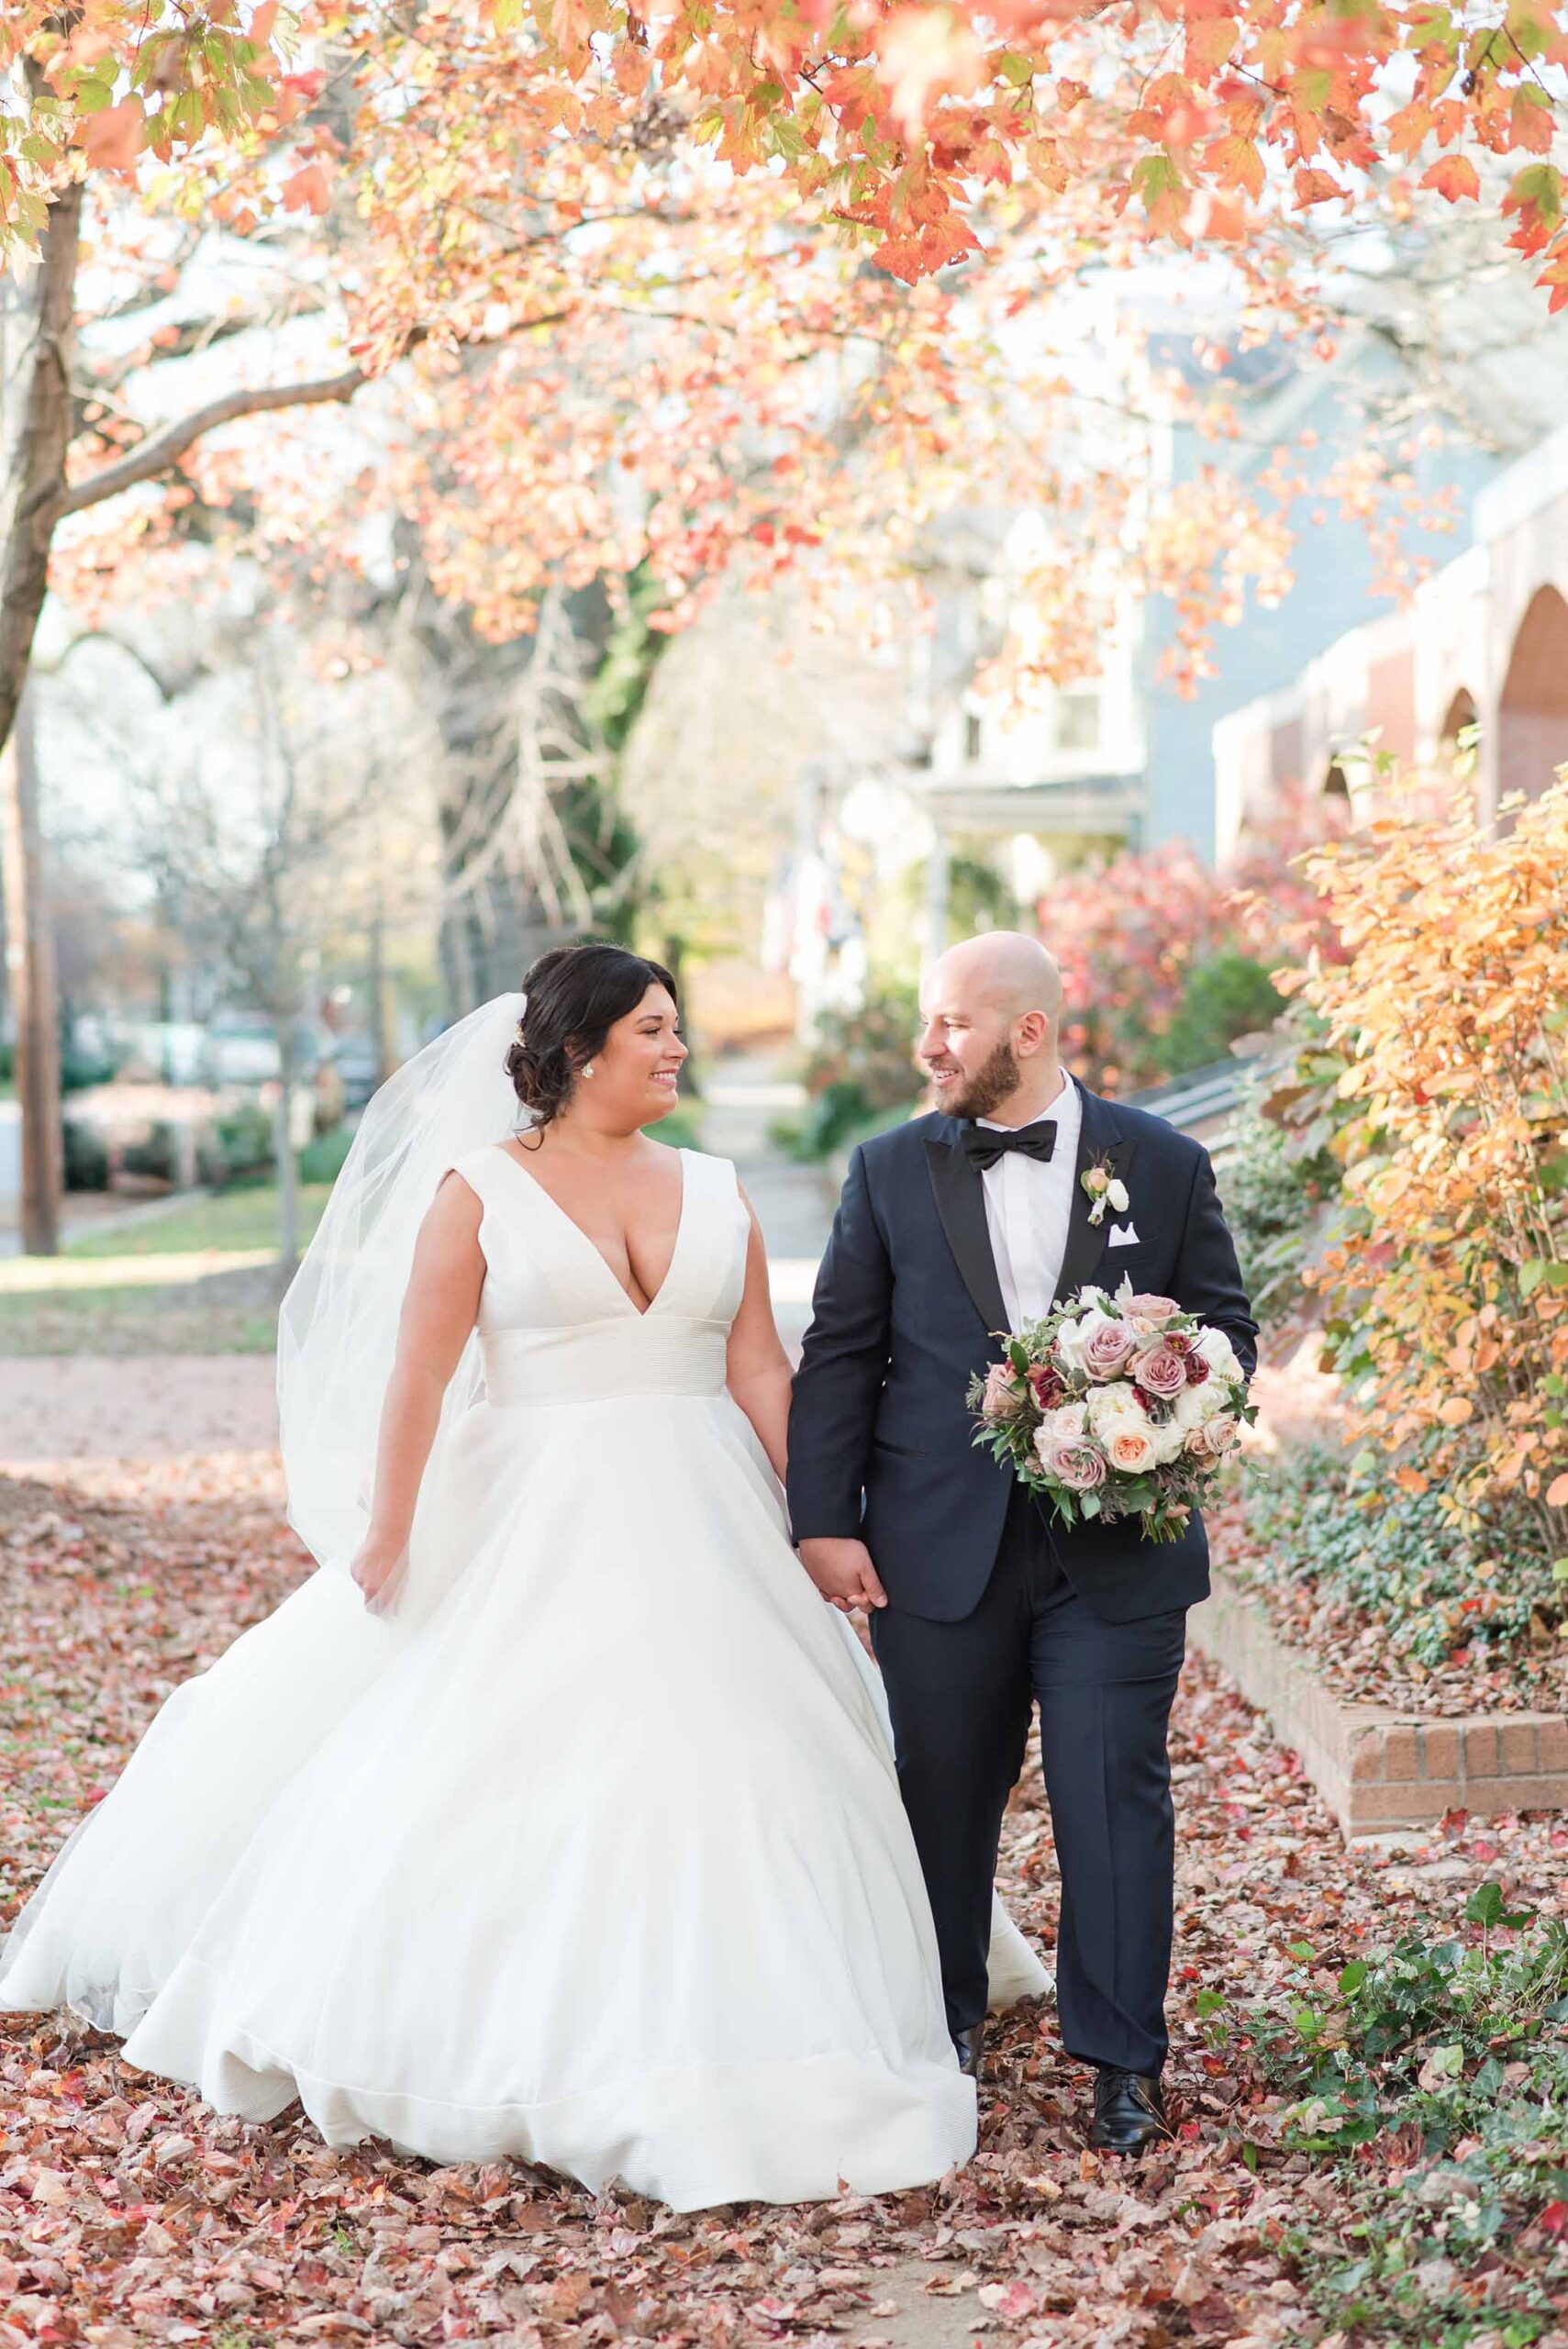 Newlyweds walk down a sidewalk holding hands in fall